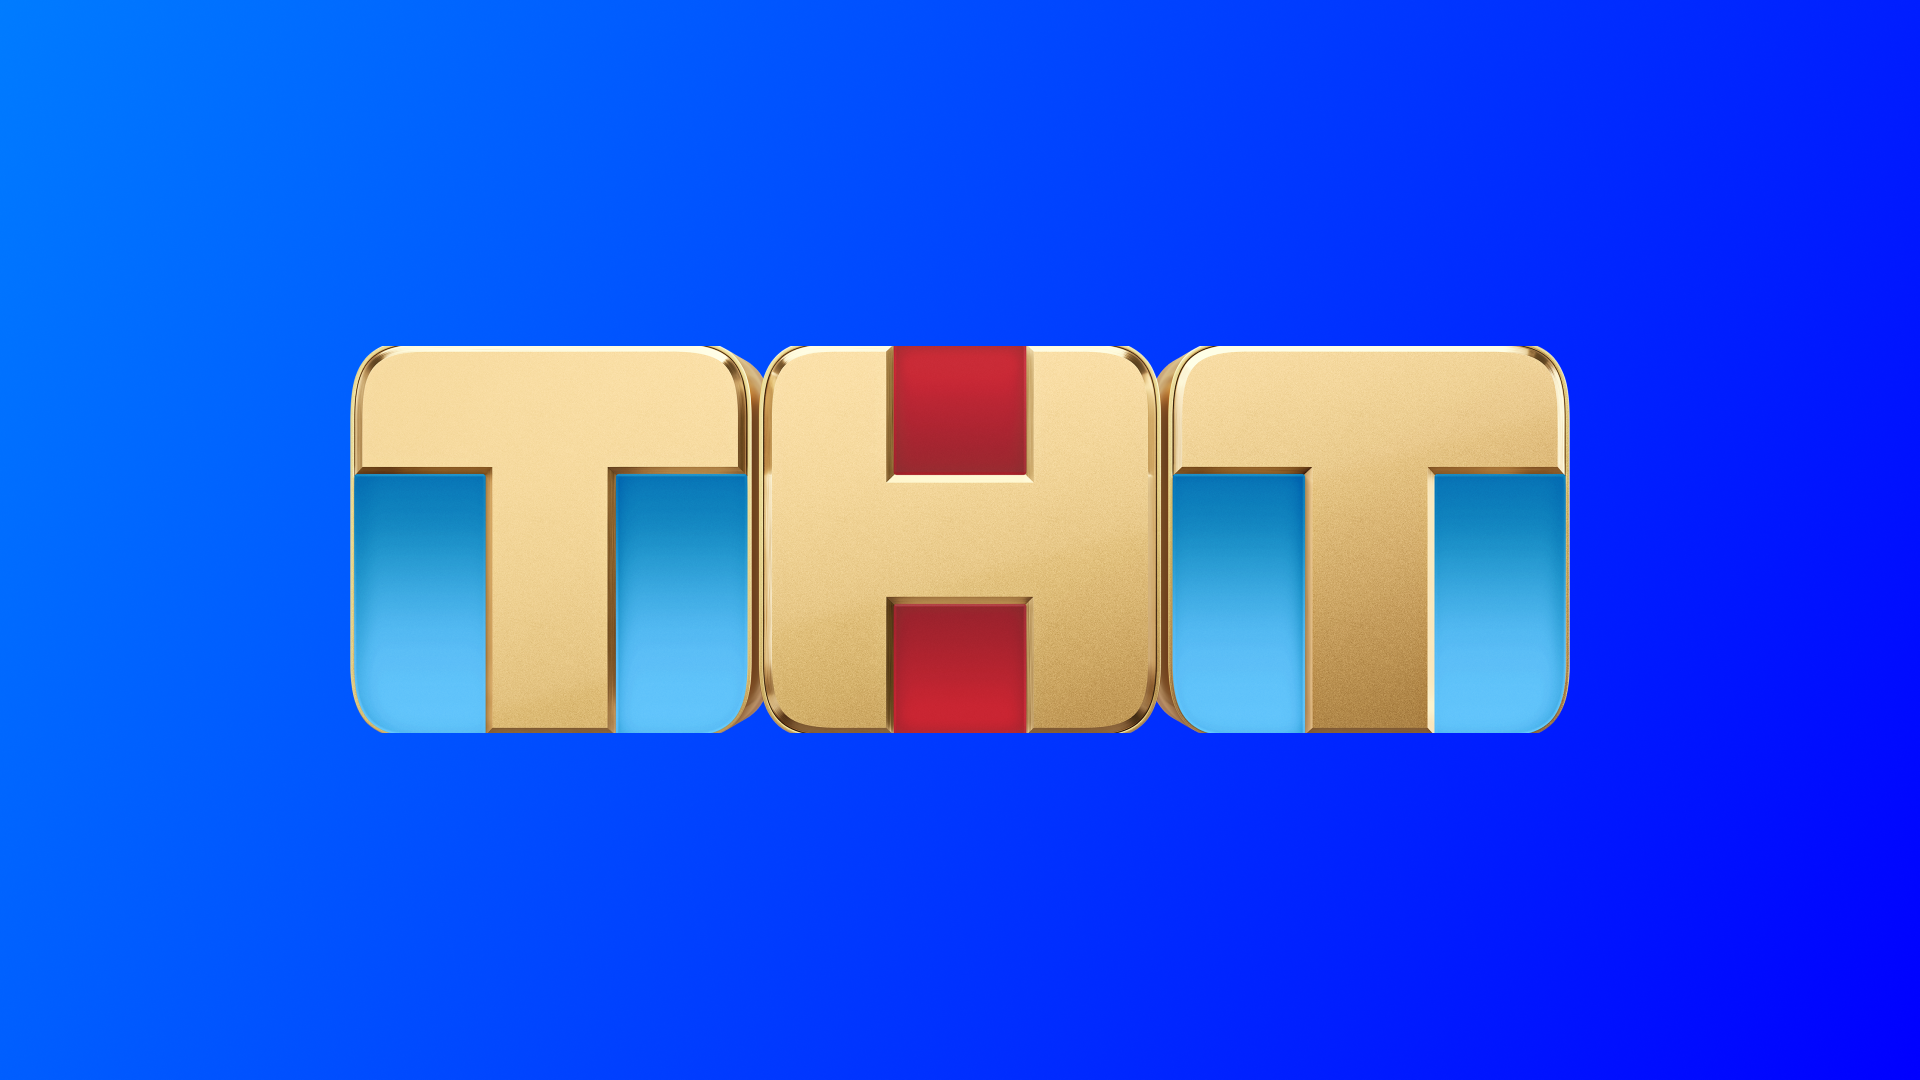 Тнт 1 эфир. ТНТ. Телеканал ТНТ. Логотип канала ТНТ. Тет (Телеканал).